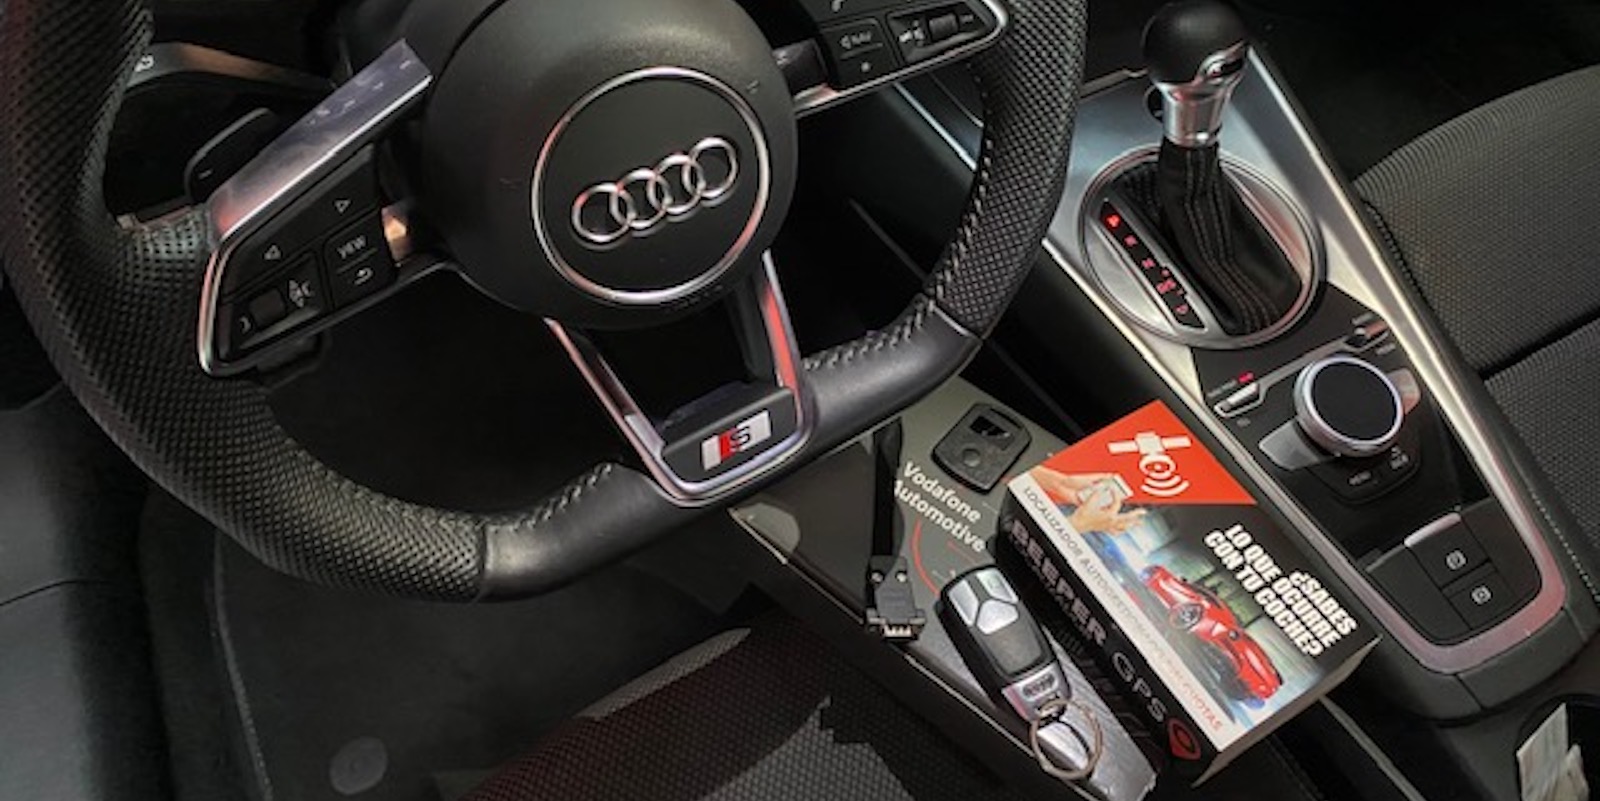 Audi TT Sistema de Seguridad Alarma, Tarjeta de proximidad, OBD y Localizador